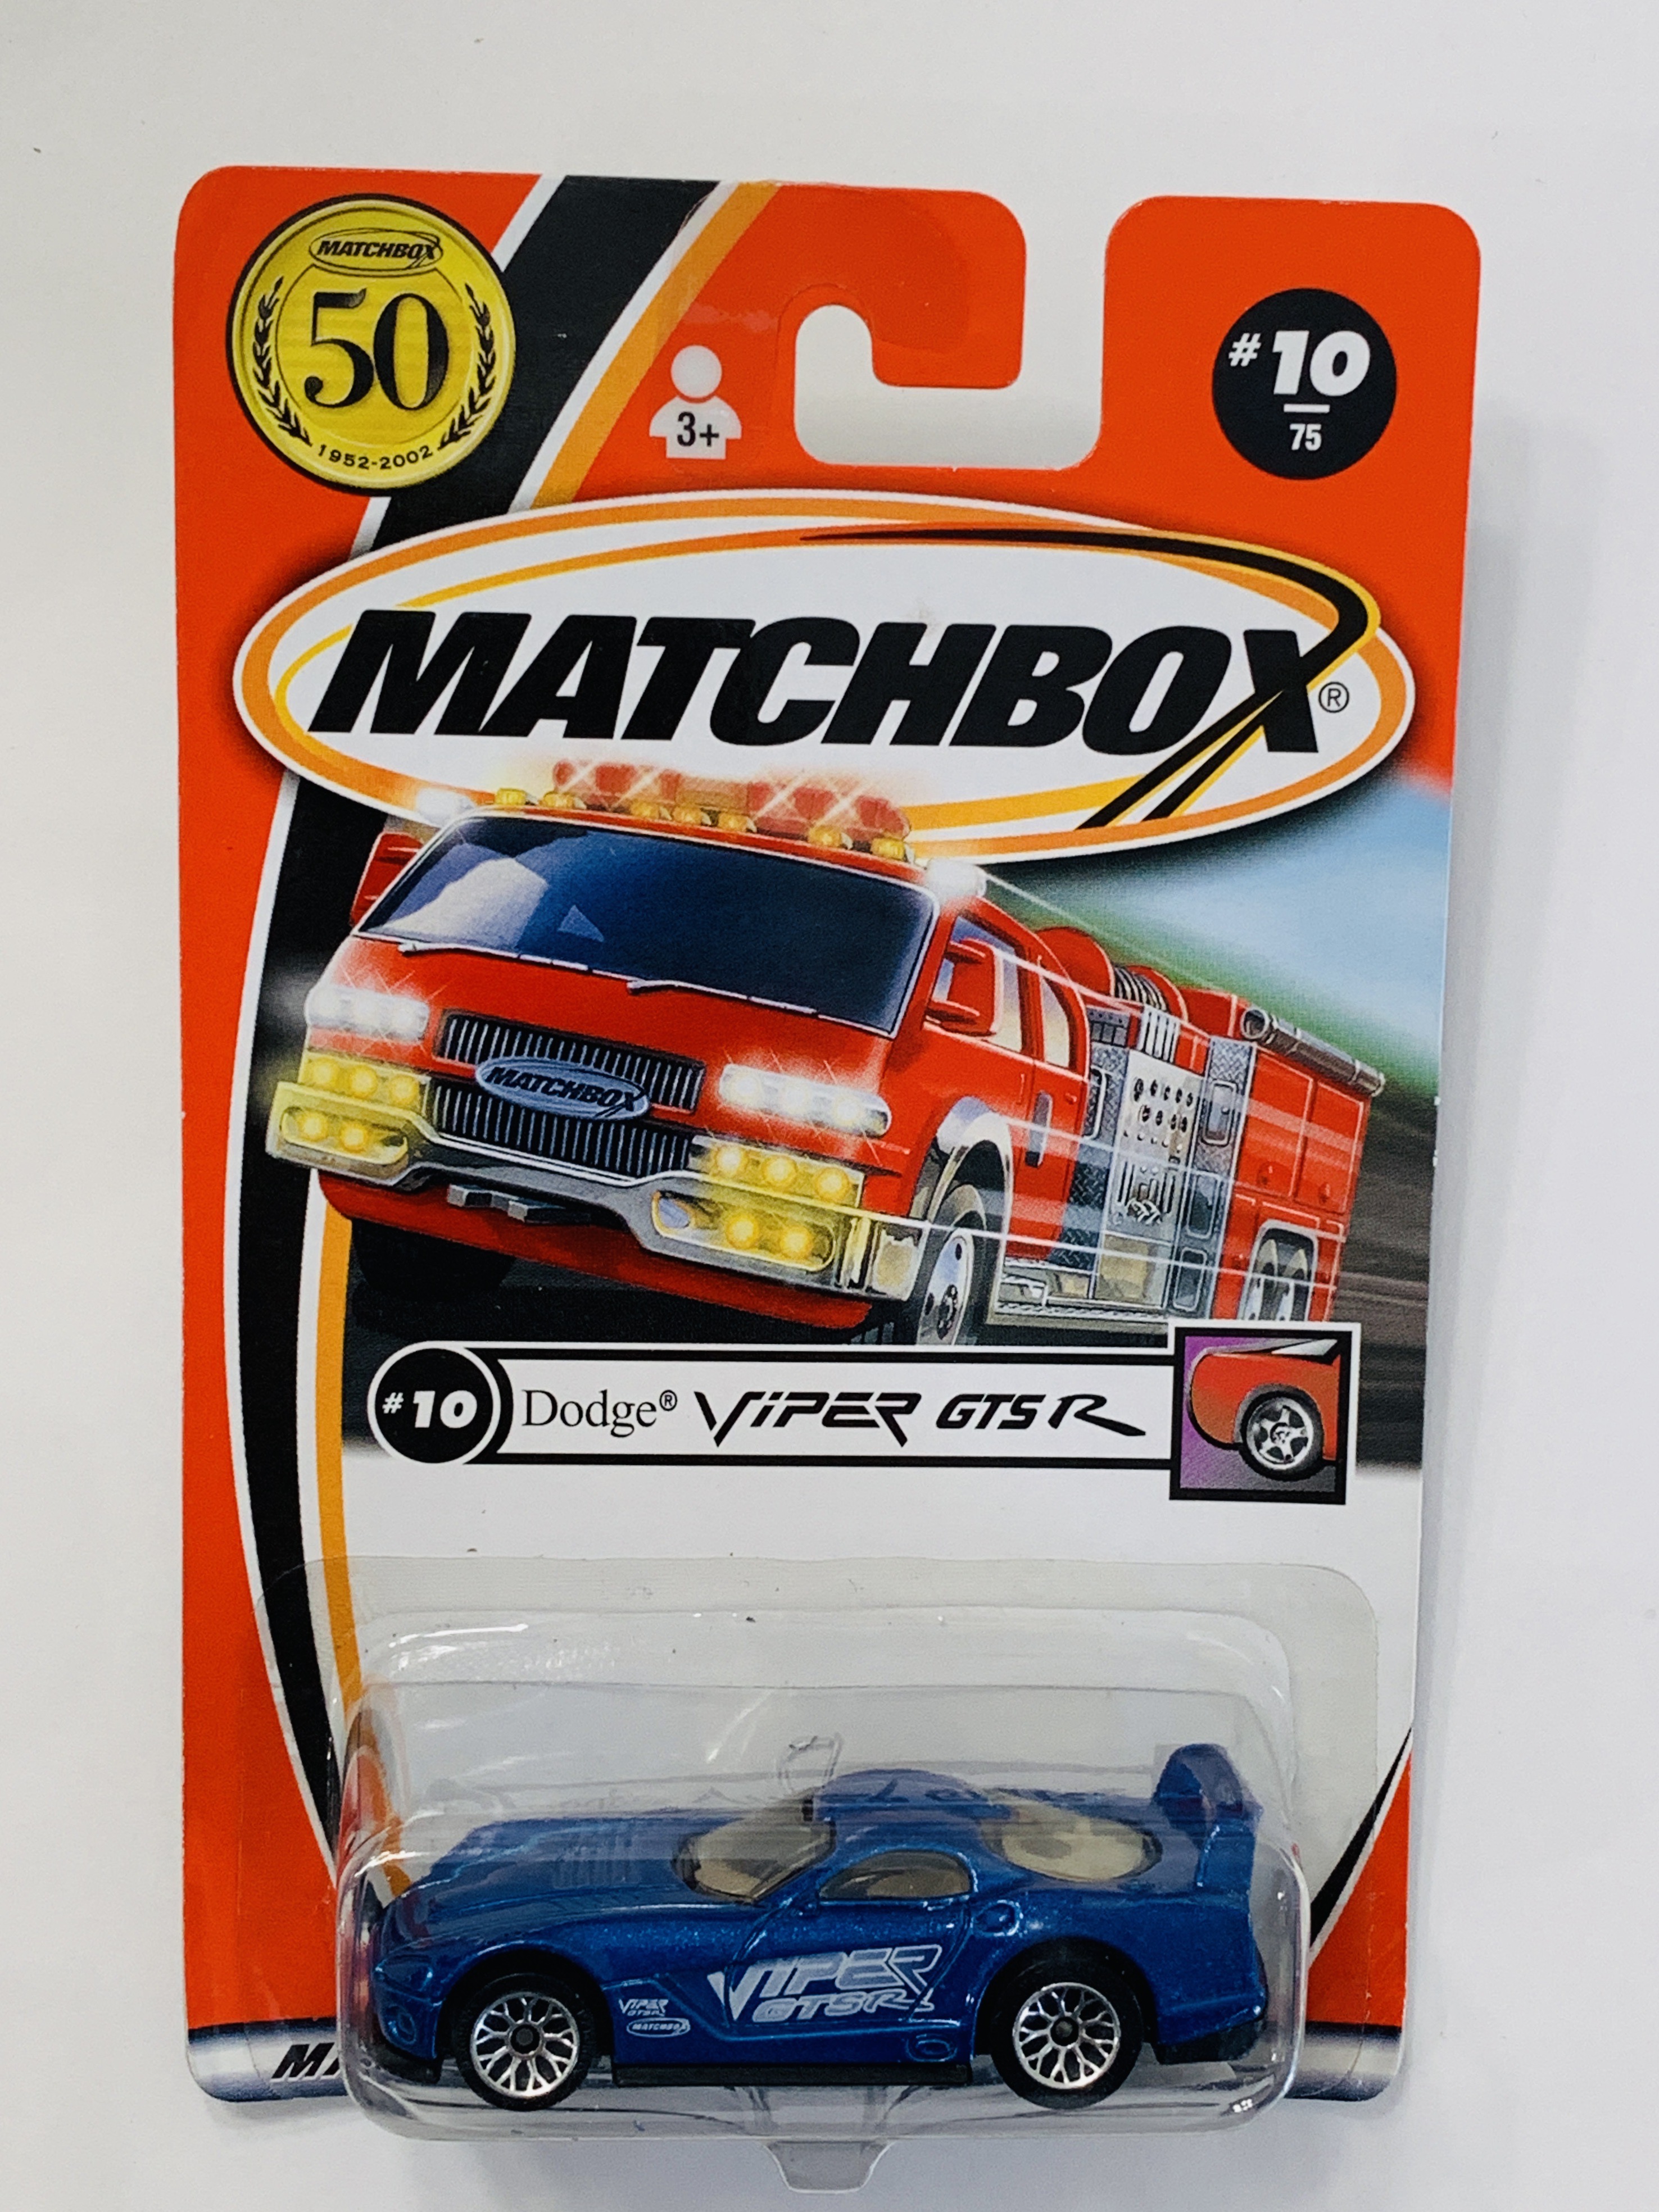 Matchbox #10 Dodge Viper GTS R